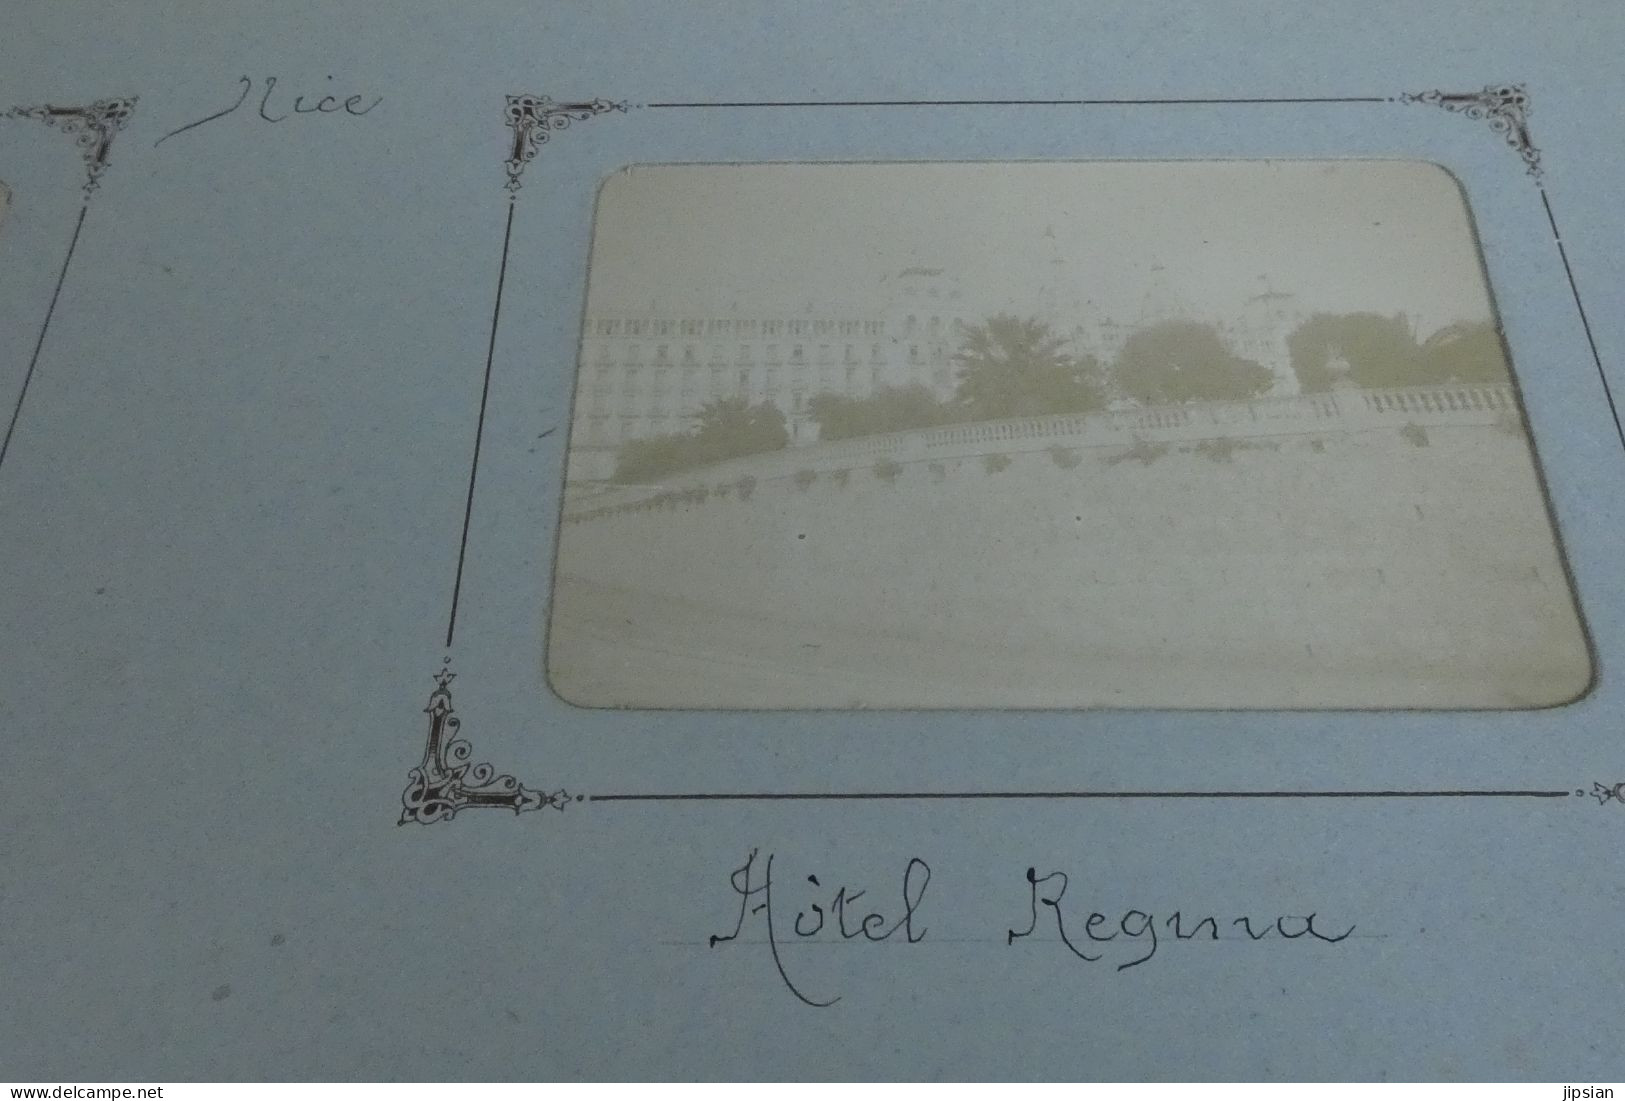 lot de 116 photos originales de 1903 de Nice ainsi que Beaulieu et Marseille M1